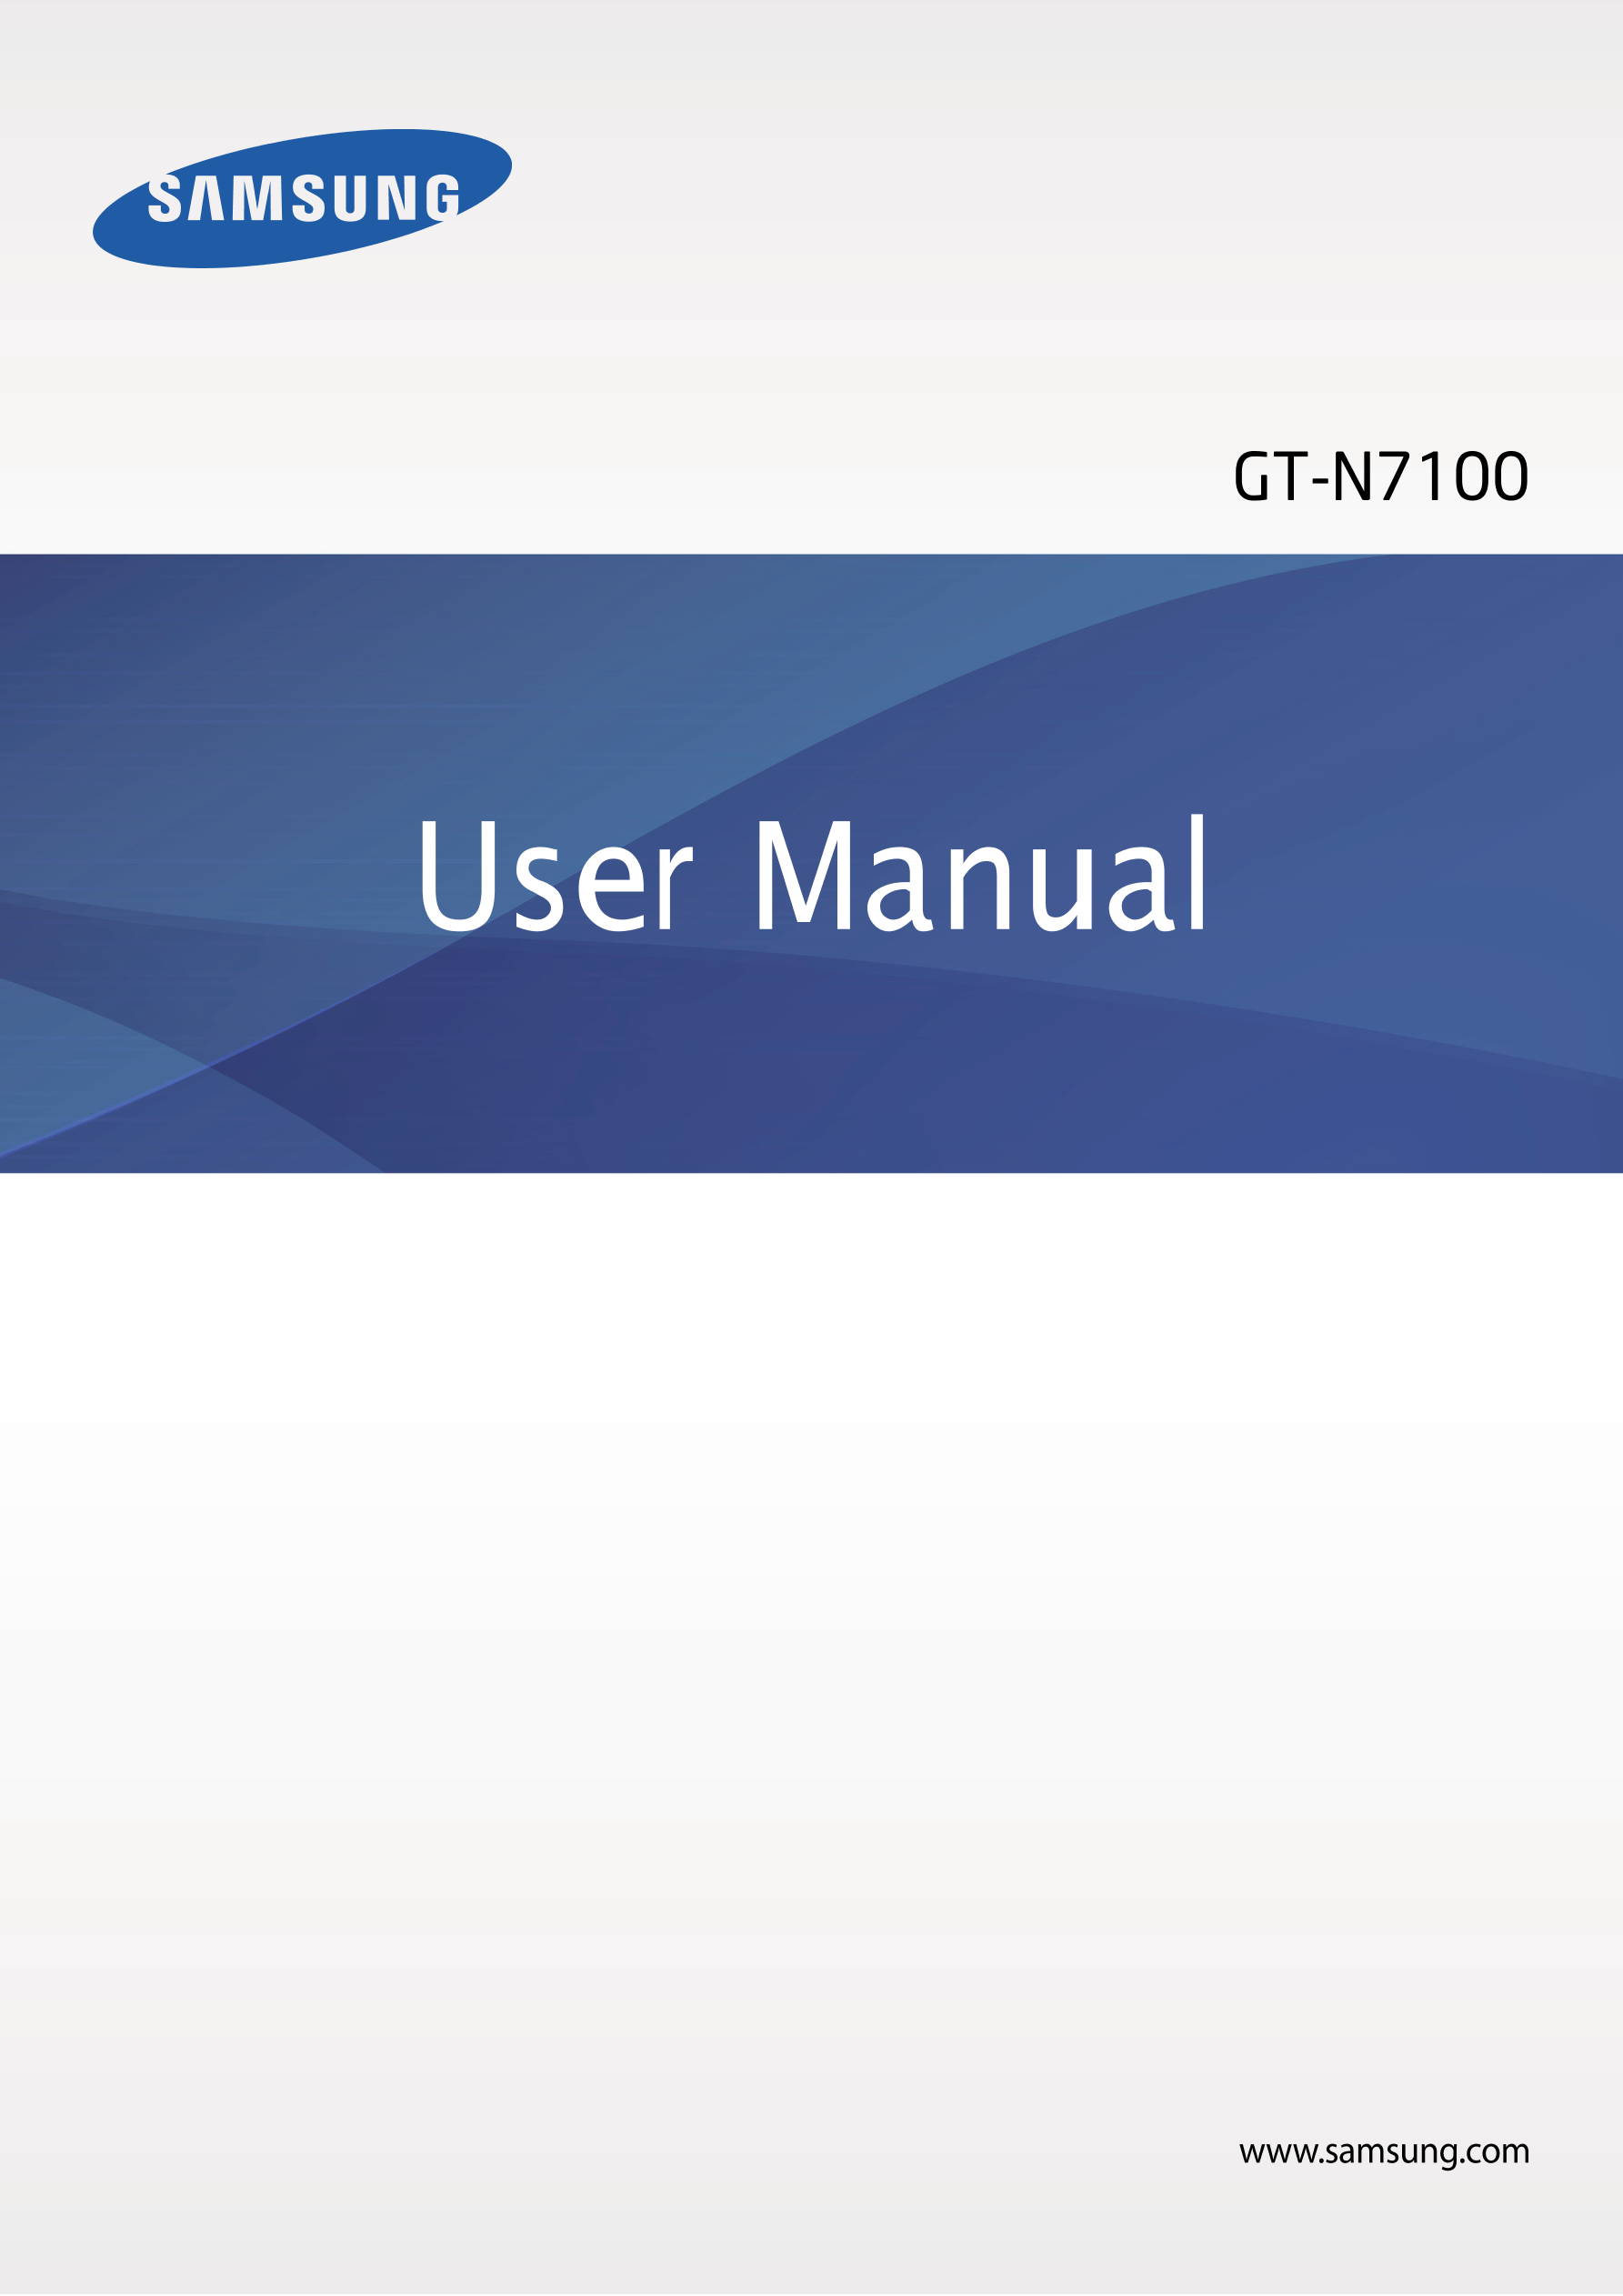 GT-N7100
User Manual
www.samsung.com